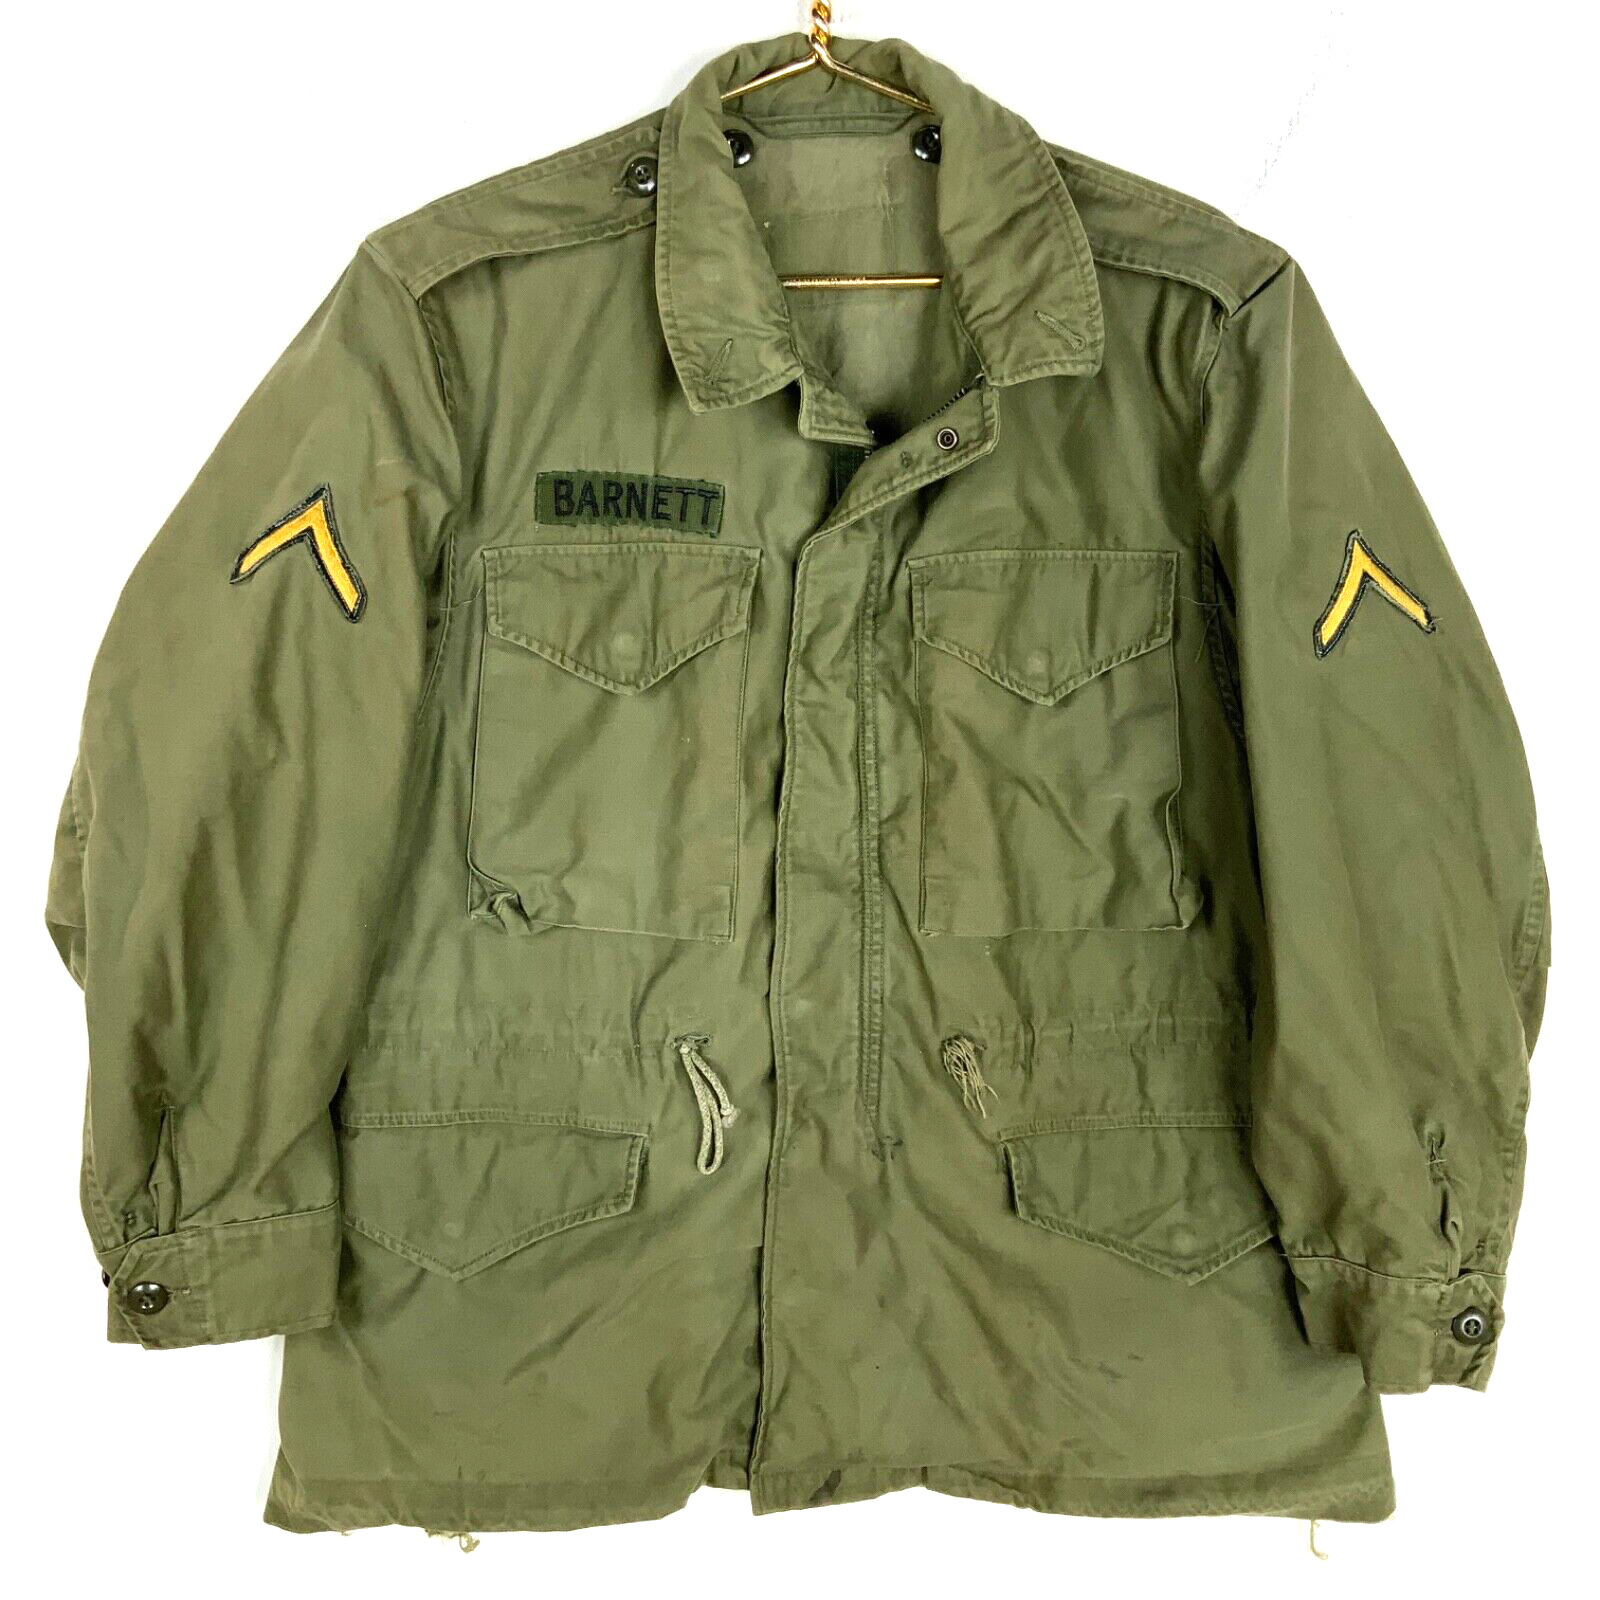 Vintage Military Og 107 Jacket Size Small Green Vietnam Era 70s